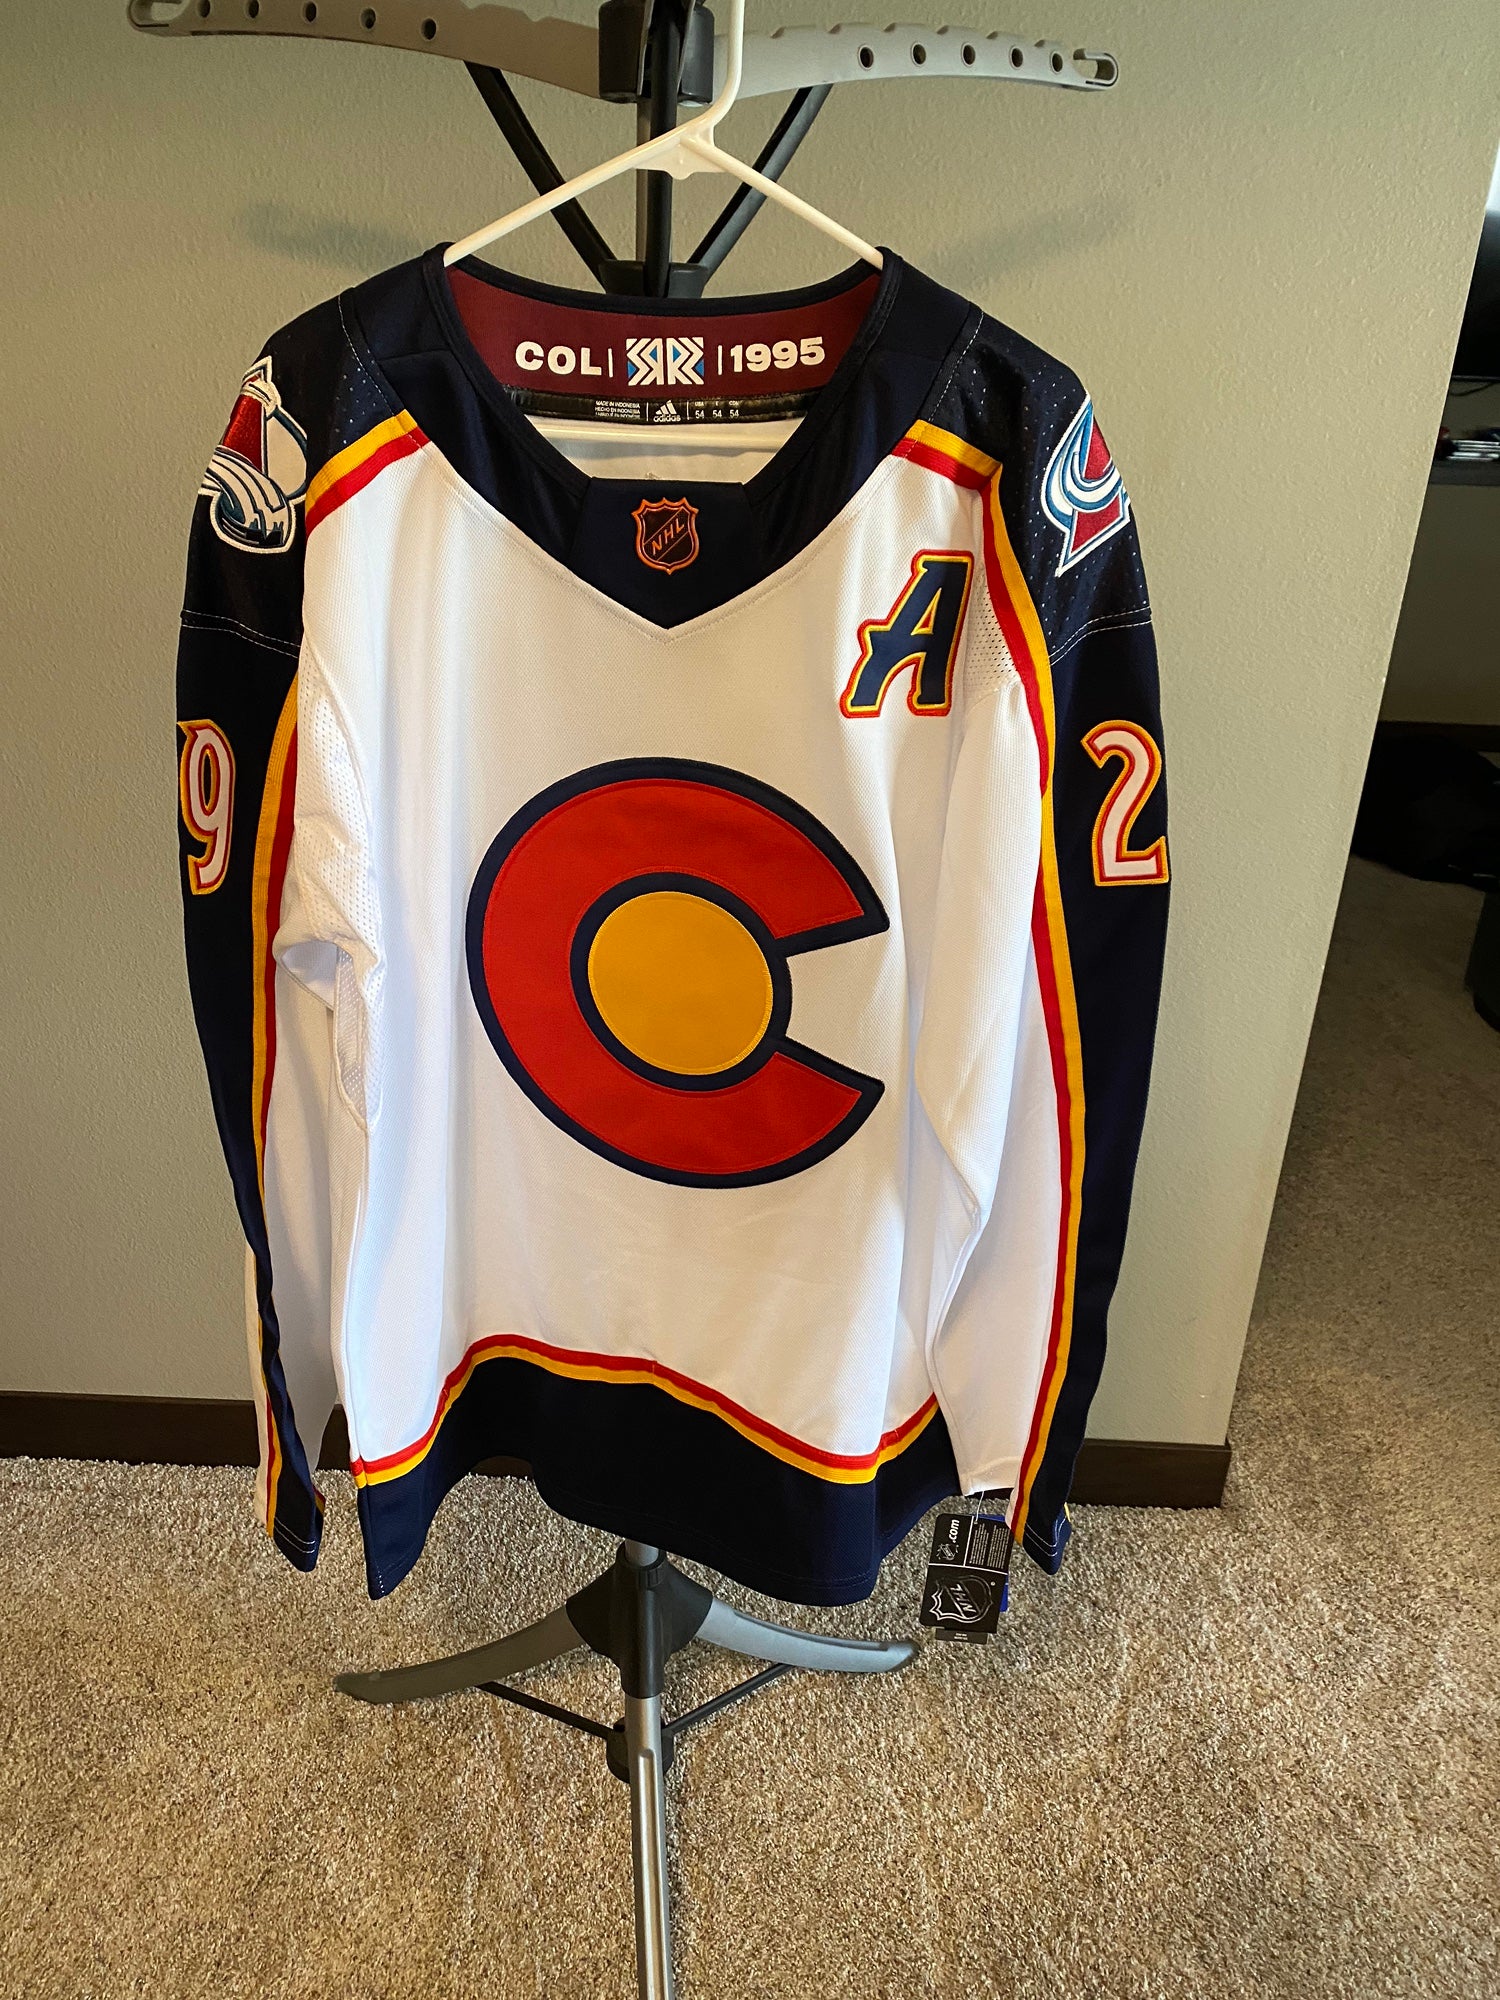 NEW* Nathan MacKinnon Colorado Avalanche NHL Jersey Size L 52